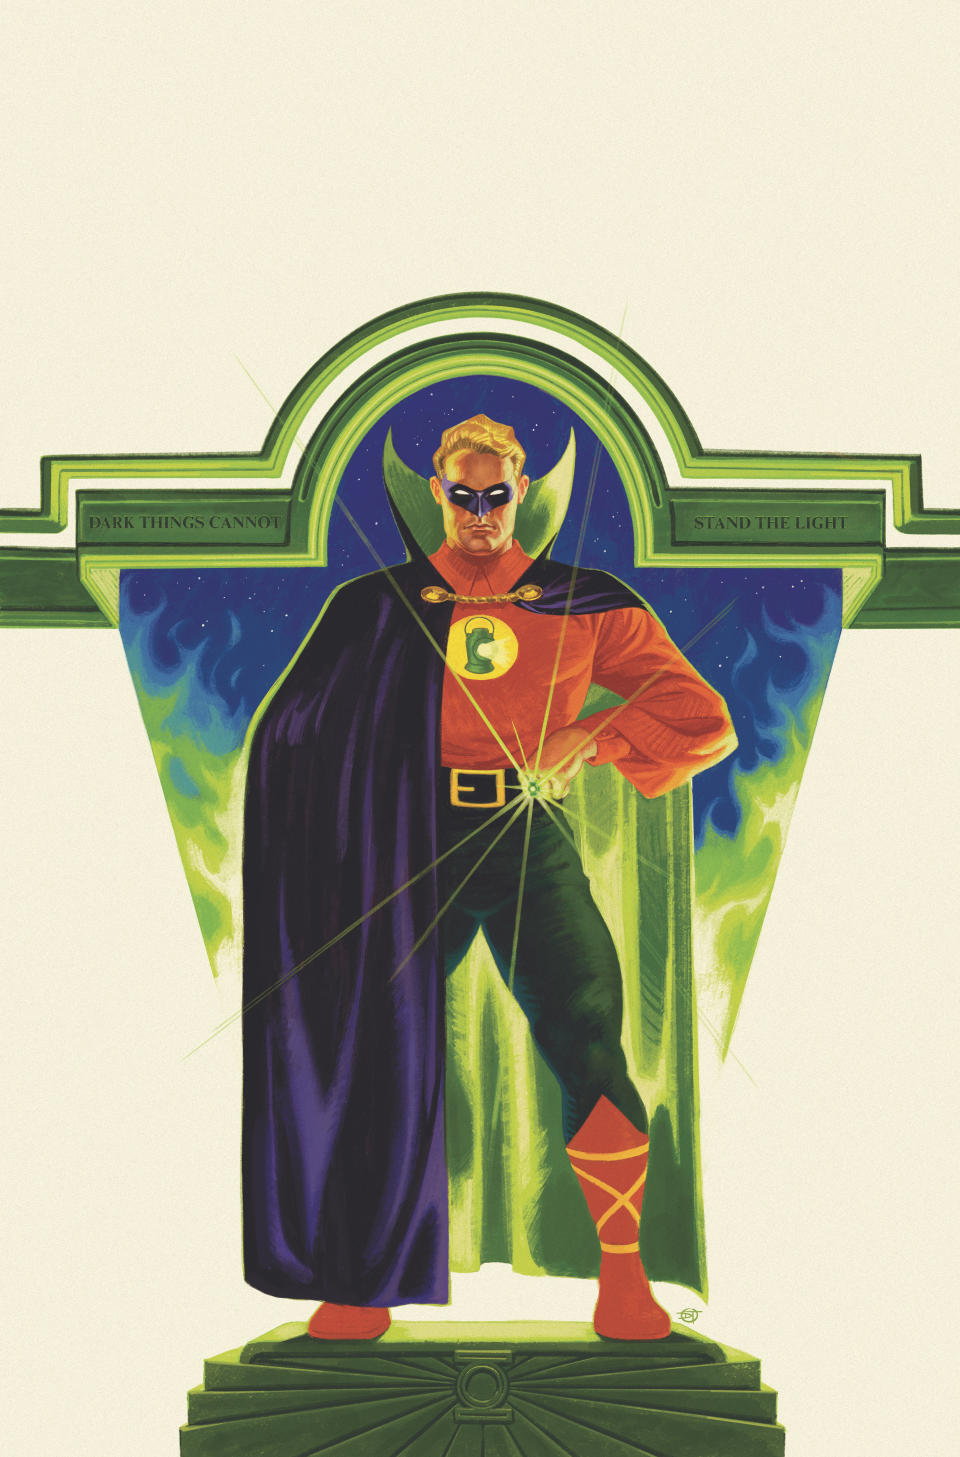 Alan Scott: The Green Lantern